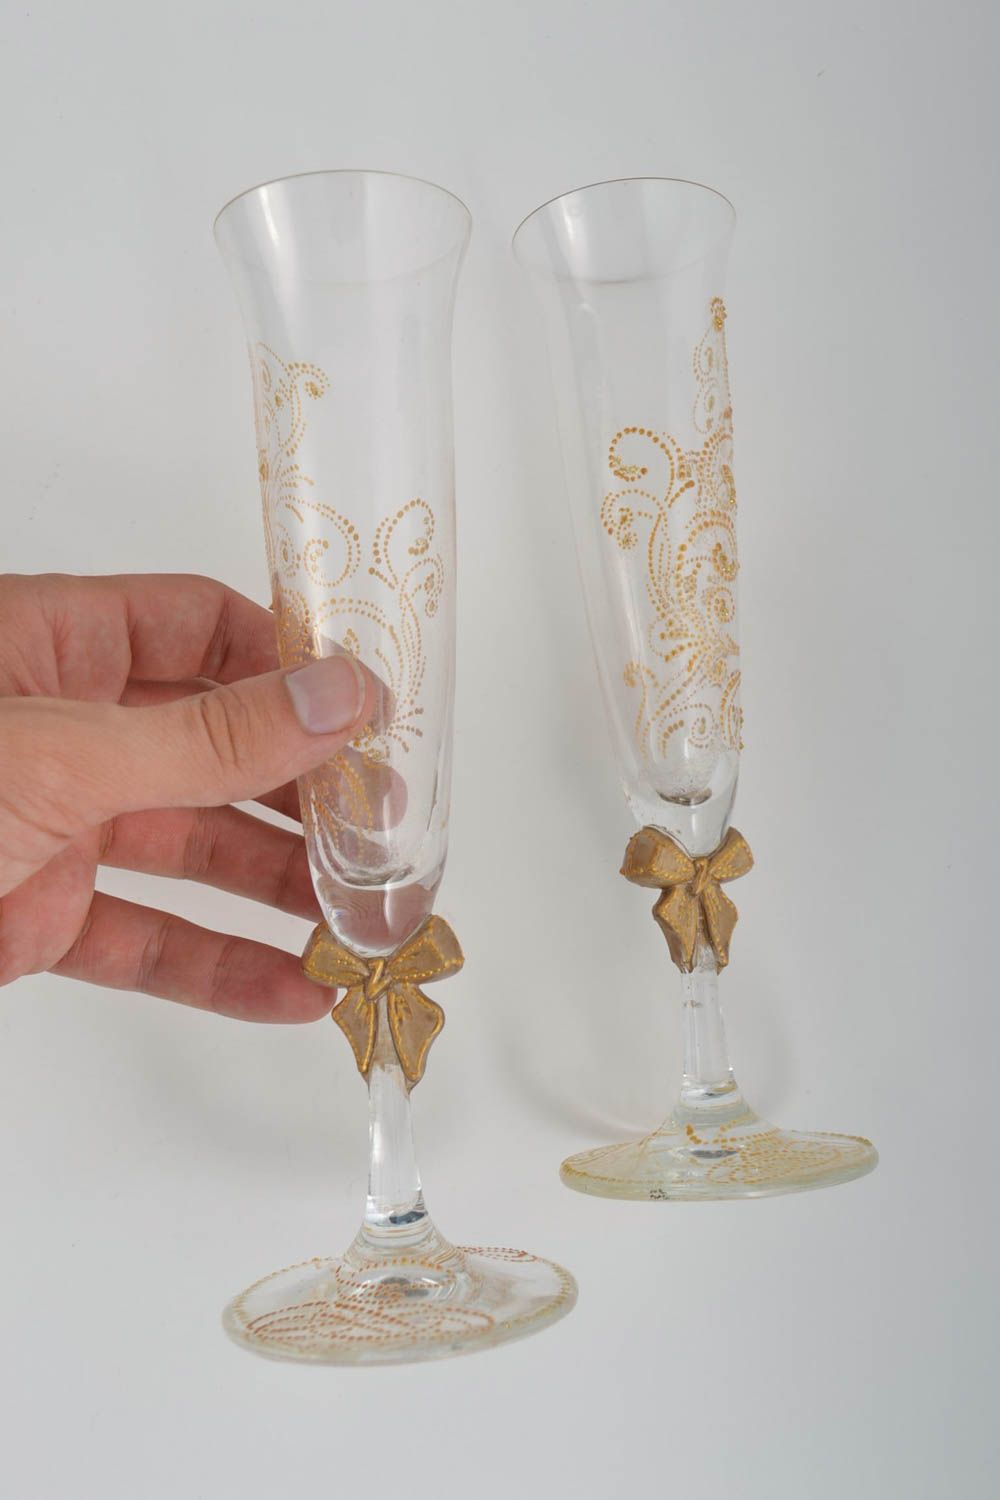 Handmade glasses for champagne beautiful stylish ware unusual cute glasses photo 5